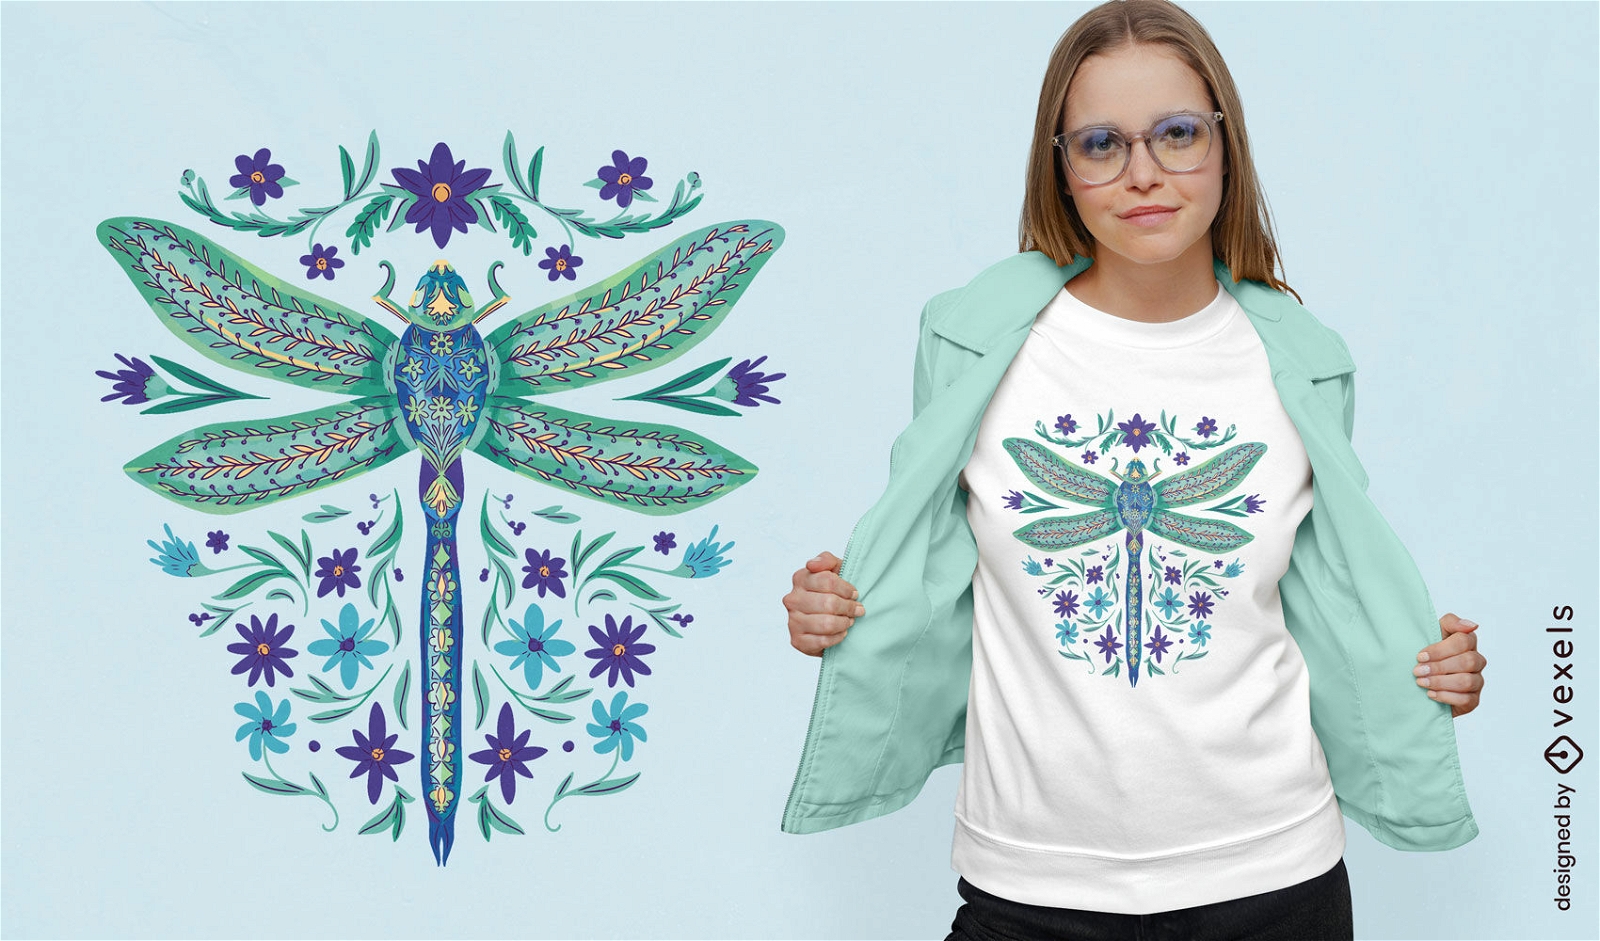 Floral dragonfly t-shirt design